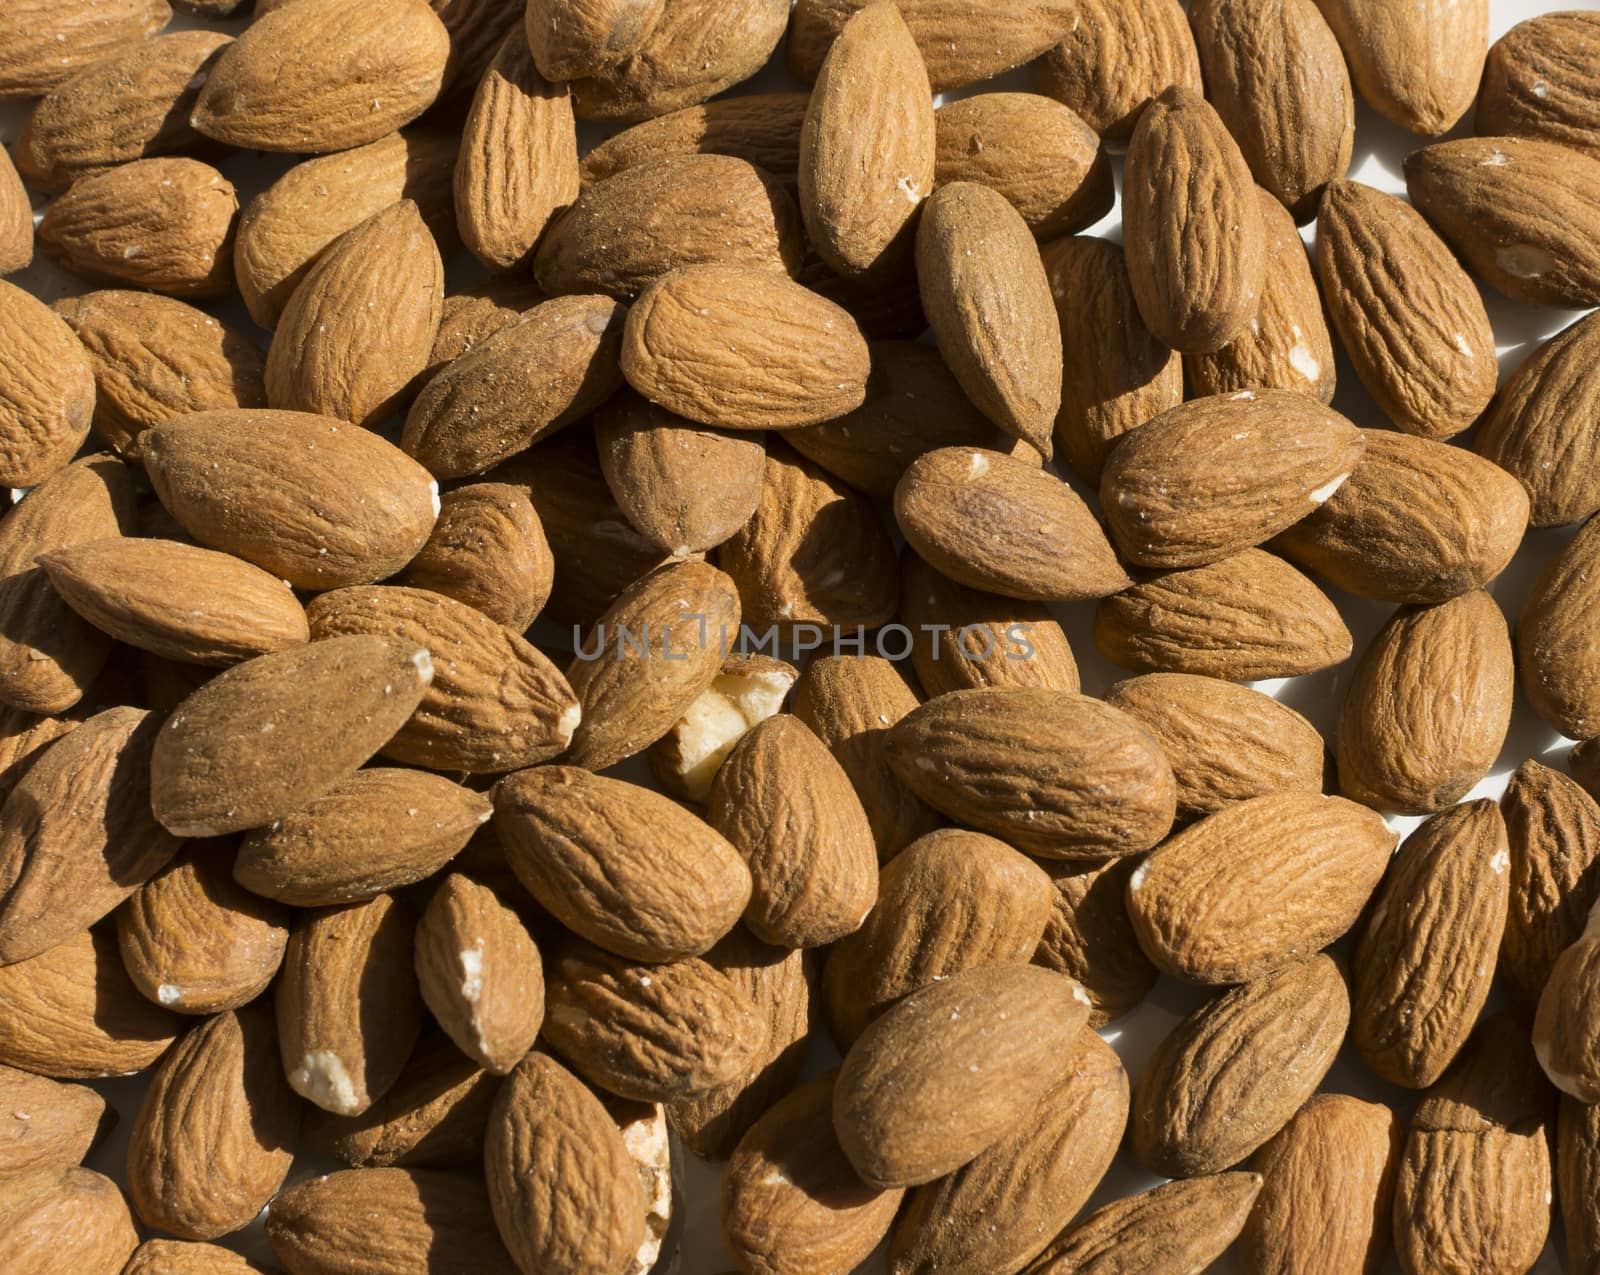 Raw almonds full frame by ArtesiaWells